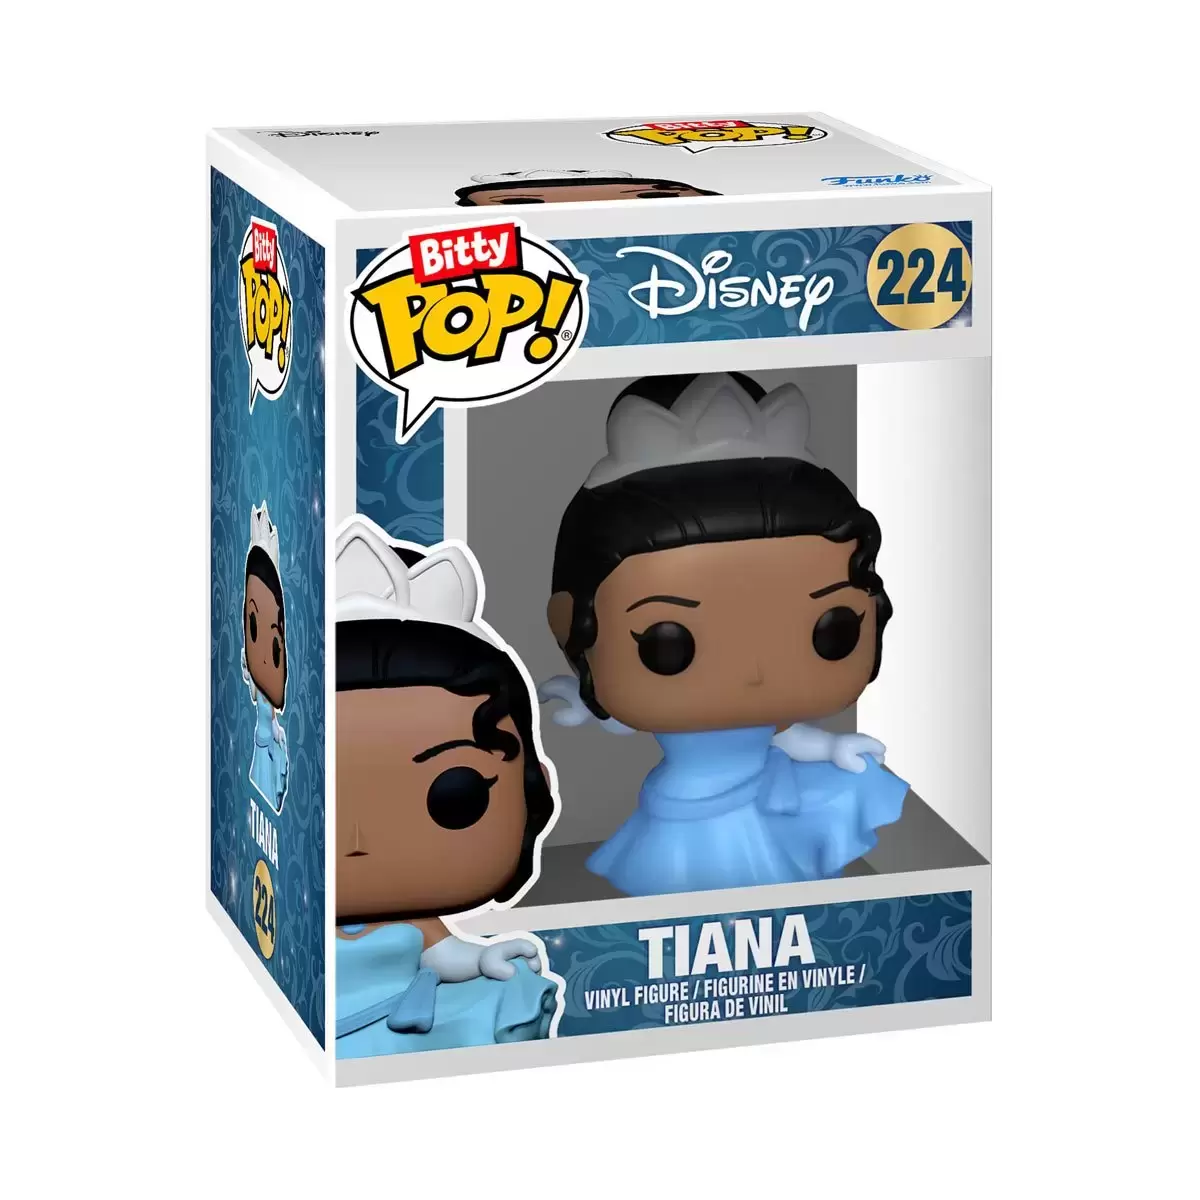 Bitty POP! - Disney Princess - Tiana